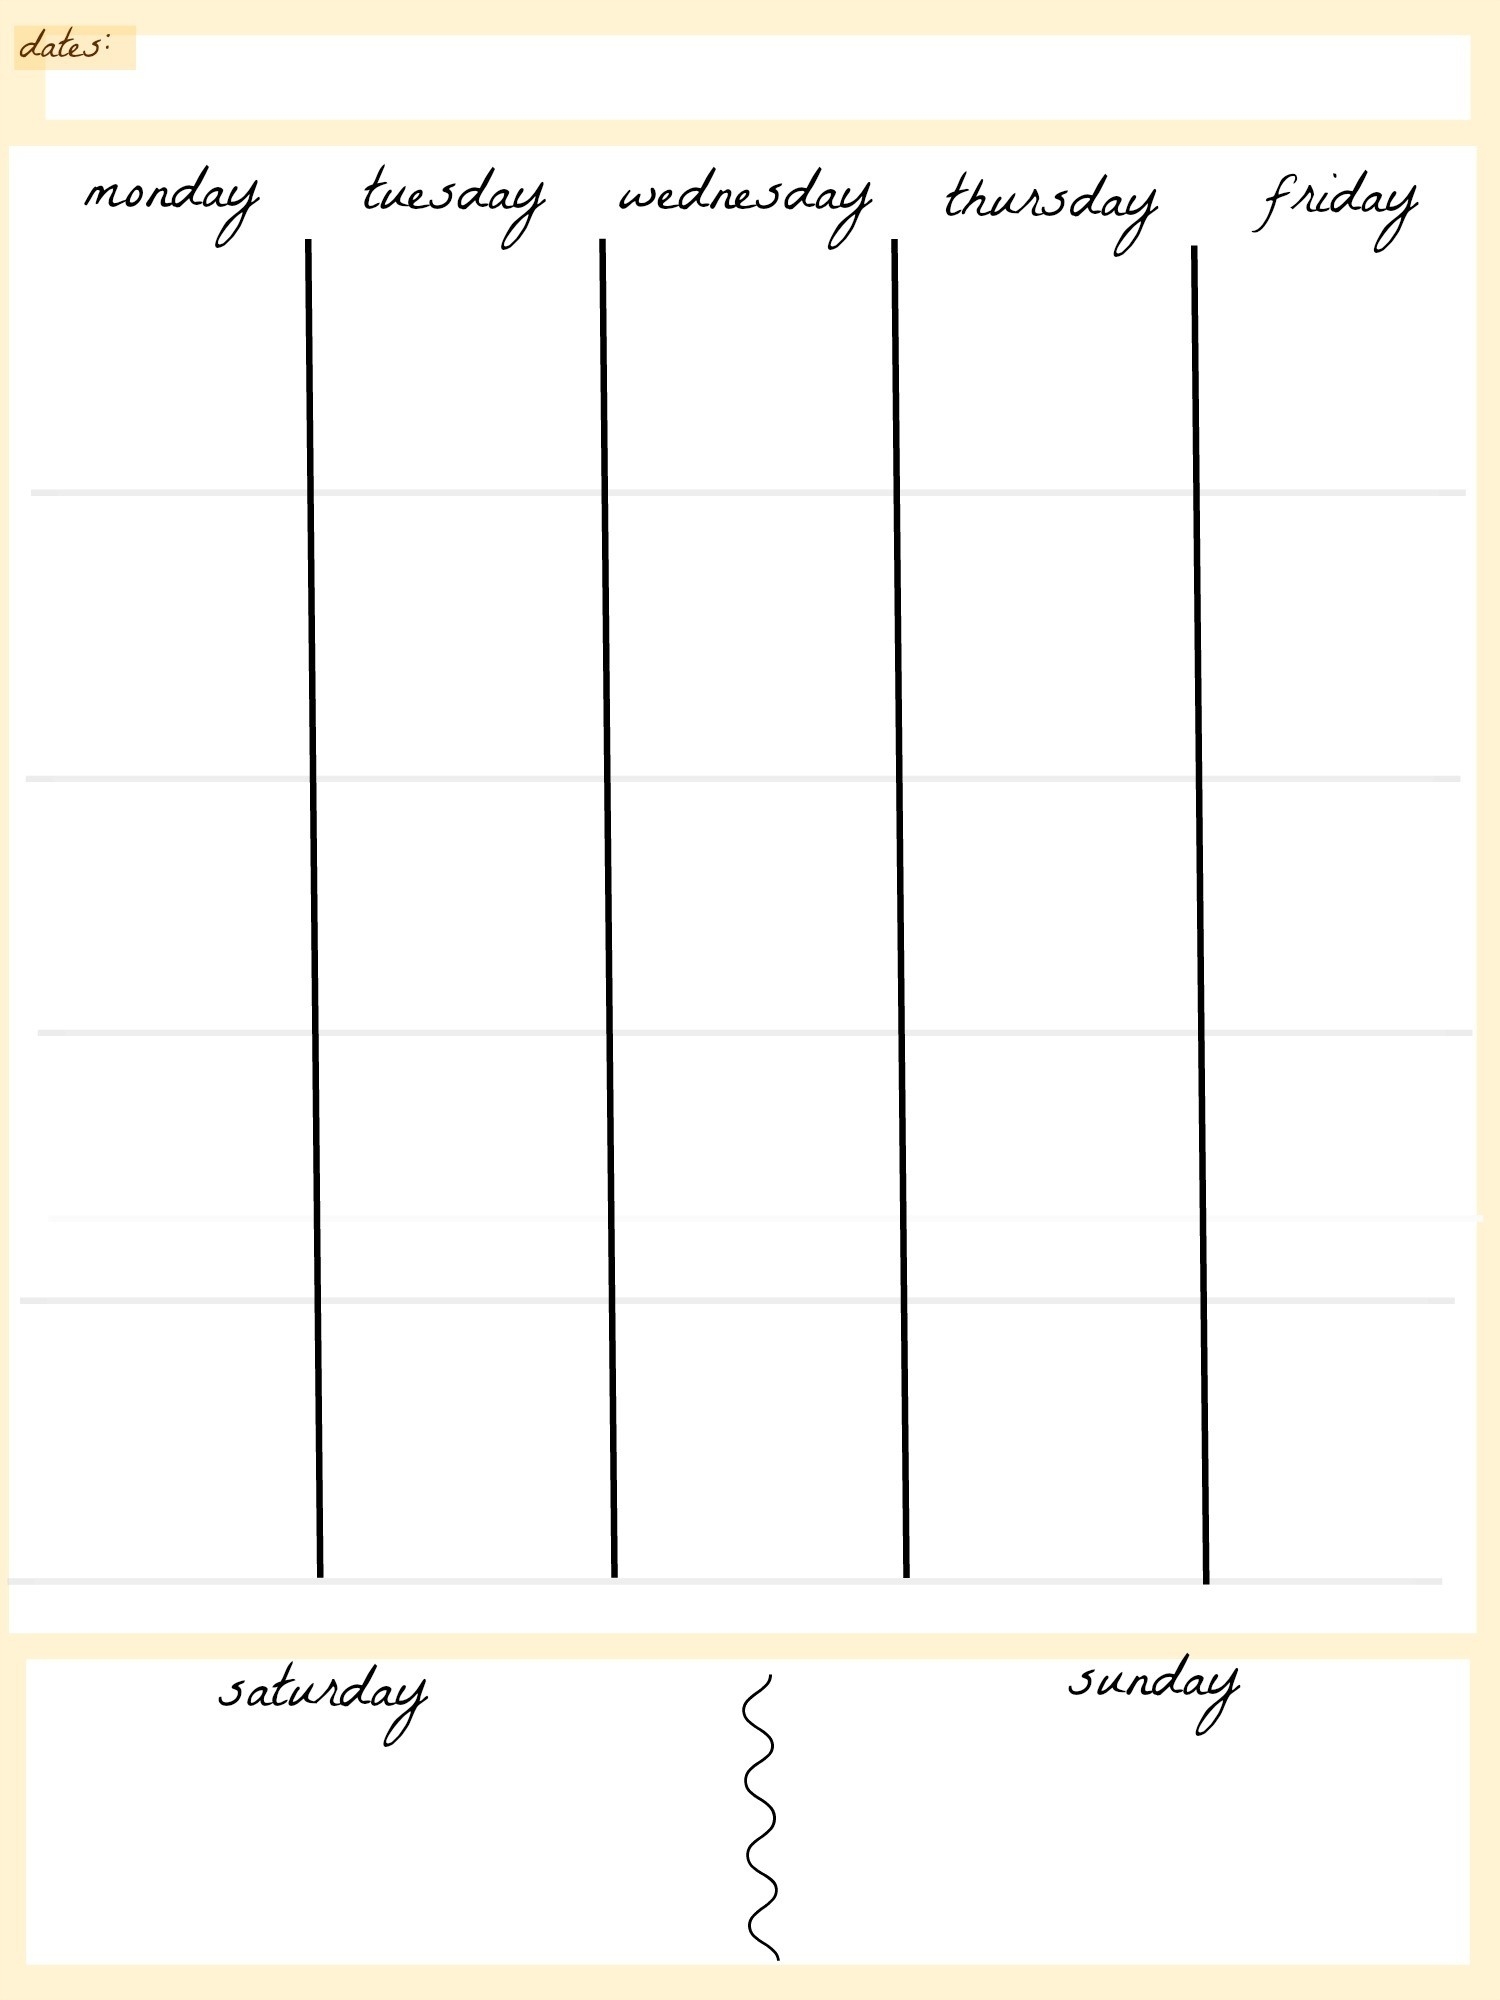 Printable 5 Day Calendar Blank Calendar Template 5 Day Week 0 8 With 5 Week Blank Calendar